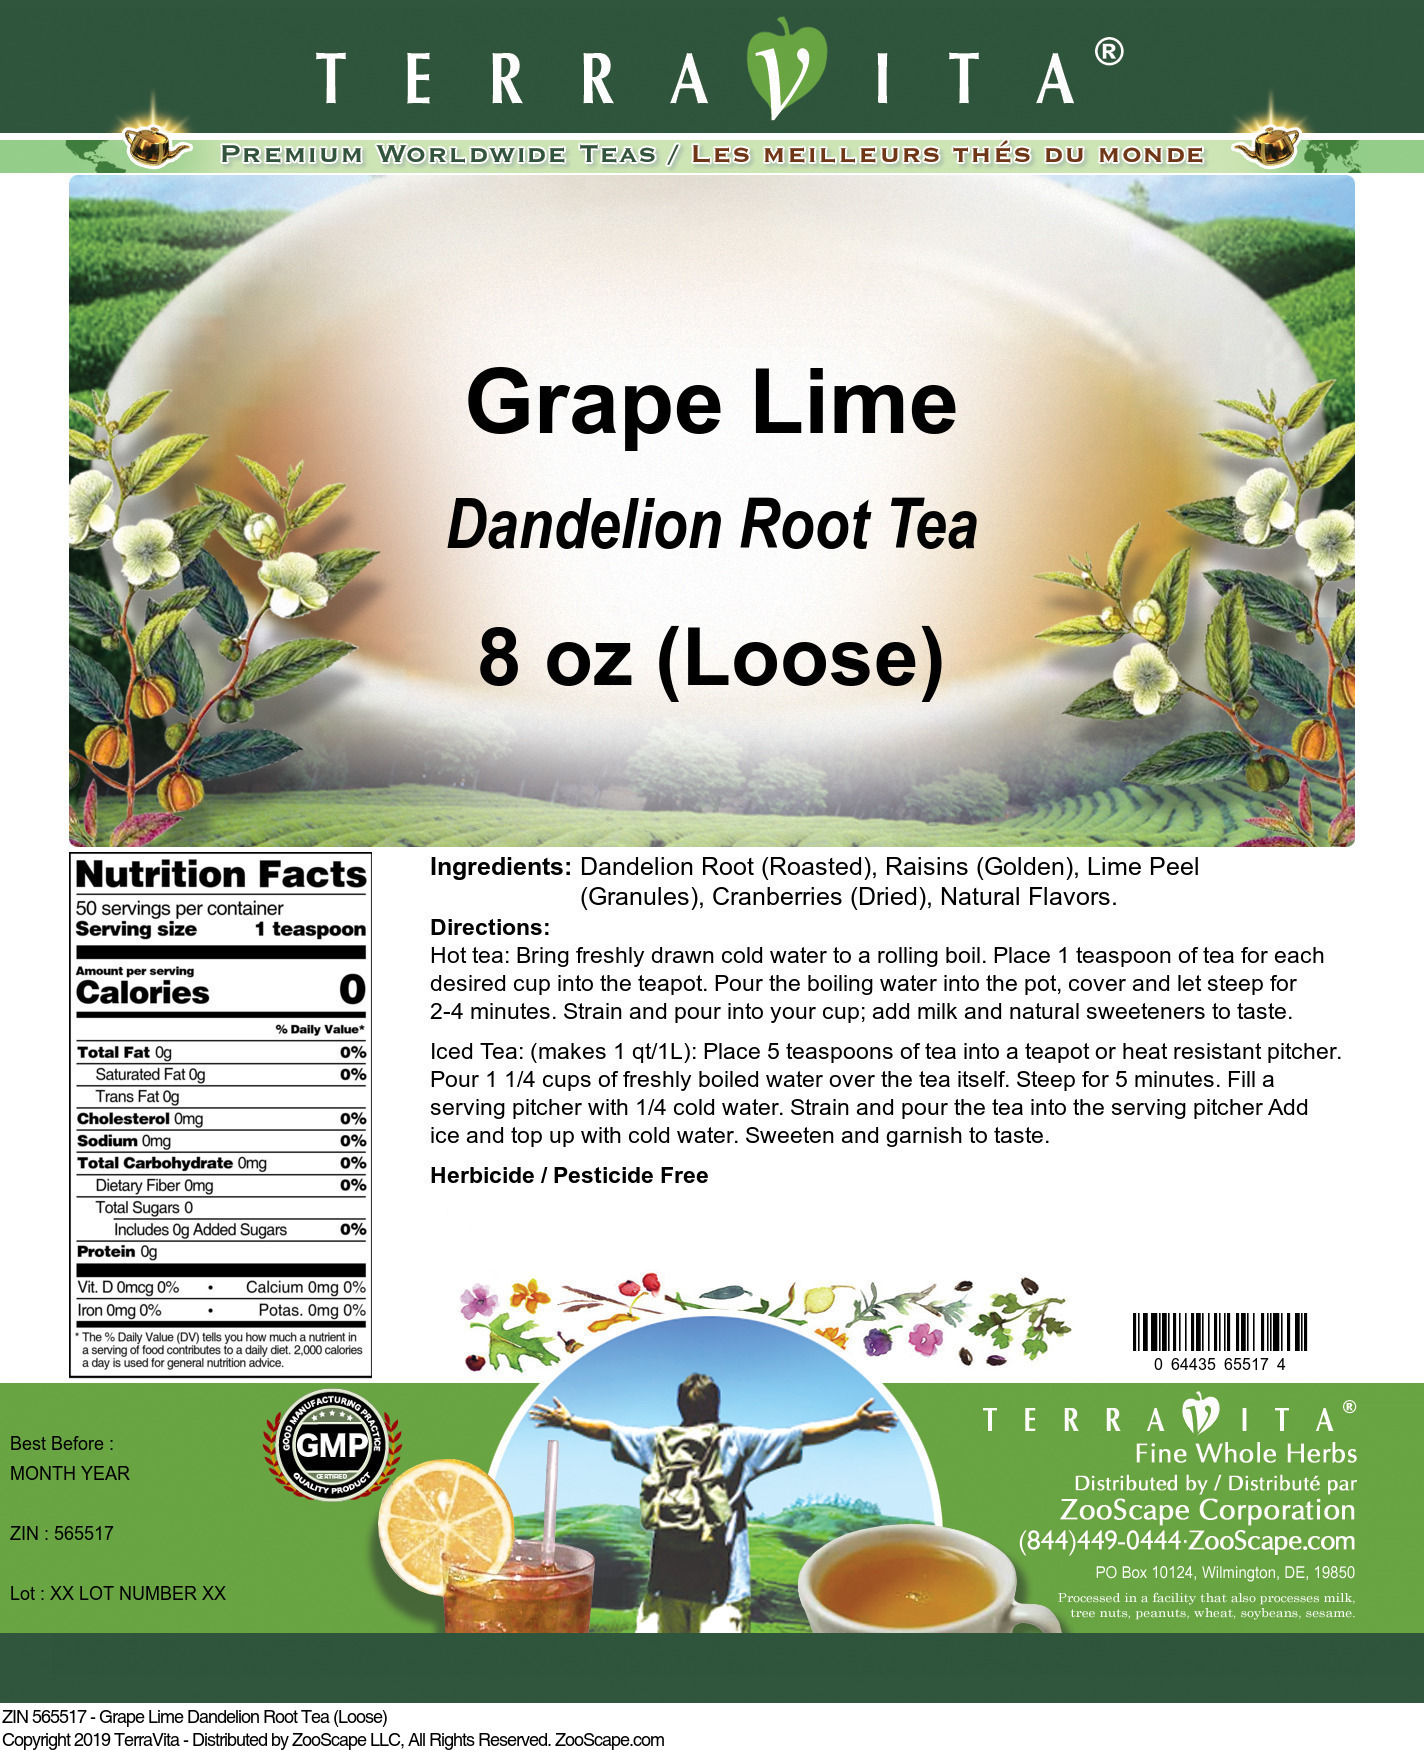 Grape Lime Dandelion Root Tea (Loose) - Label